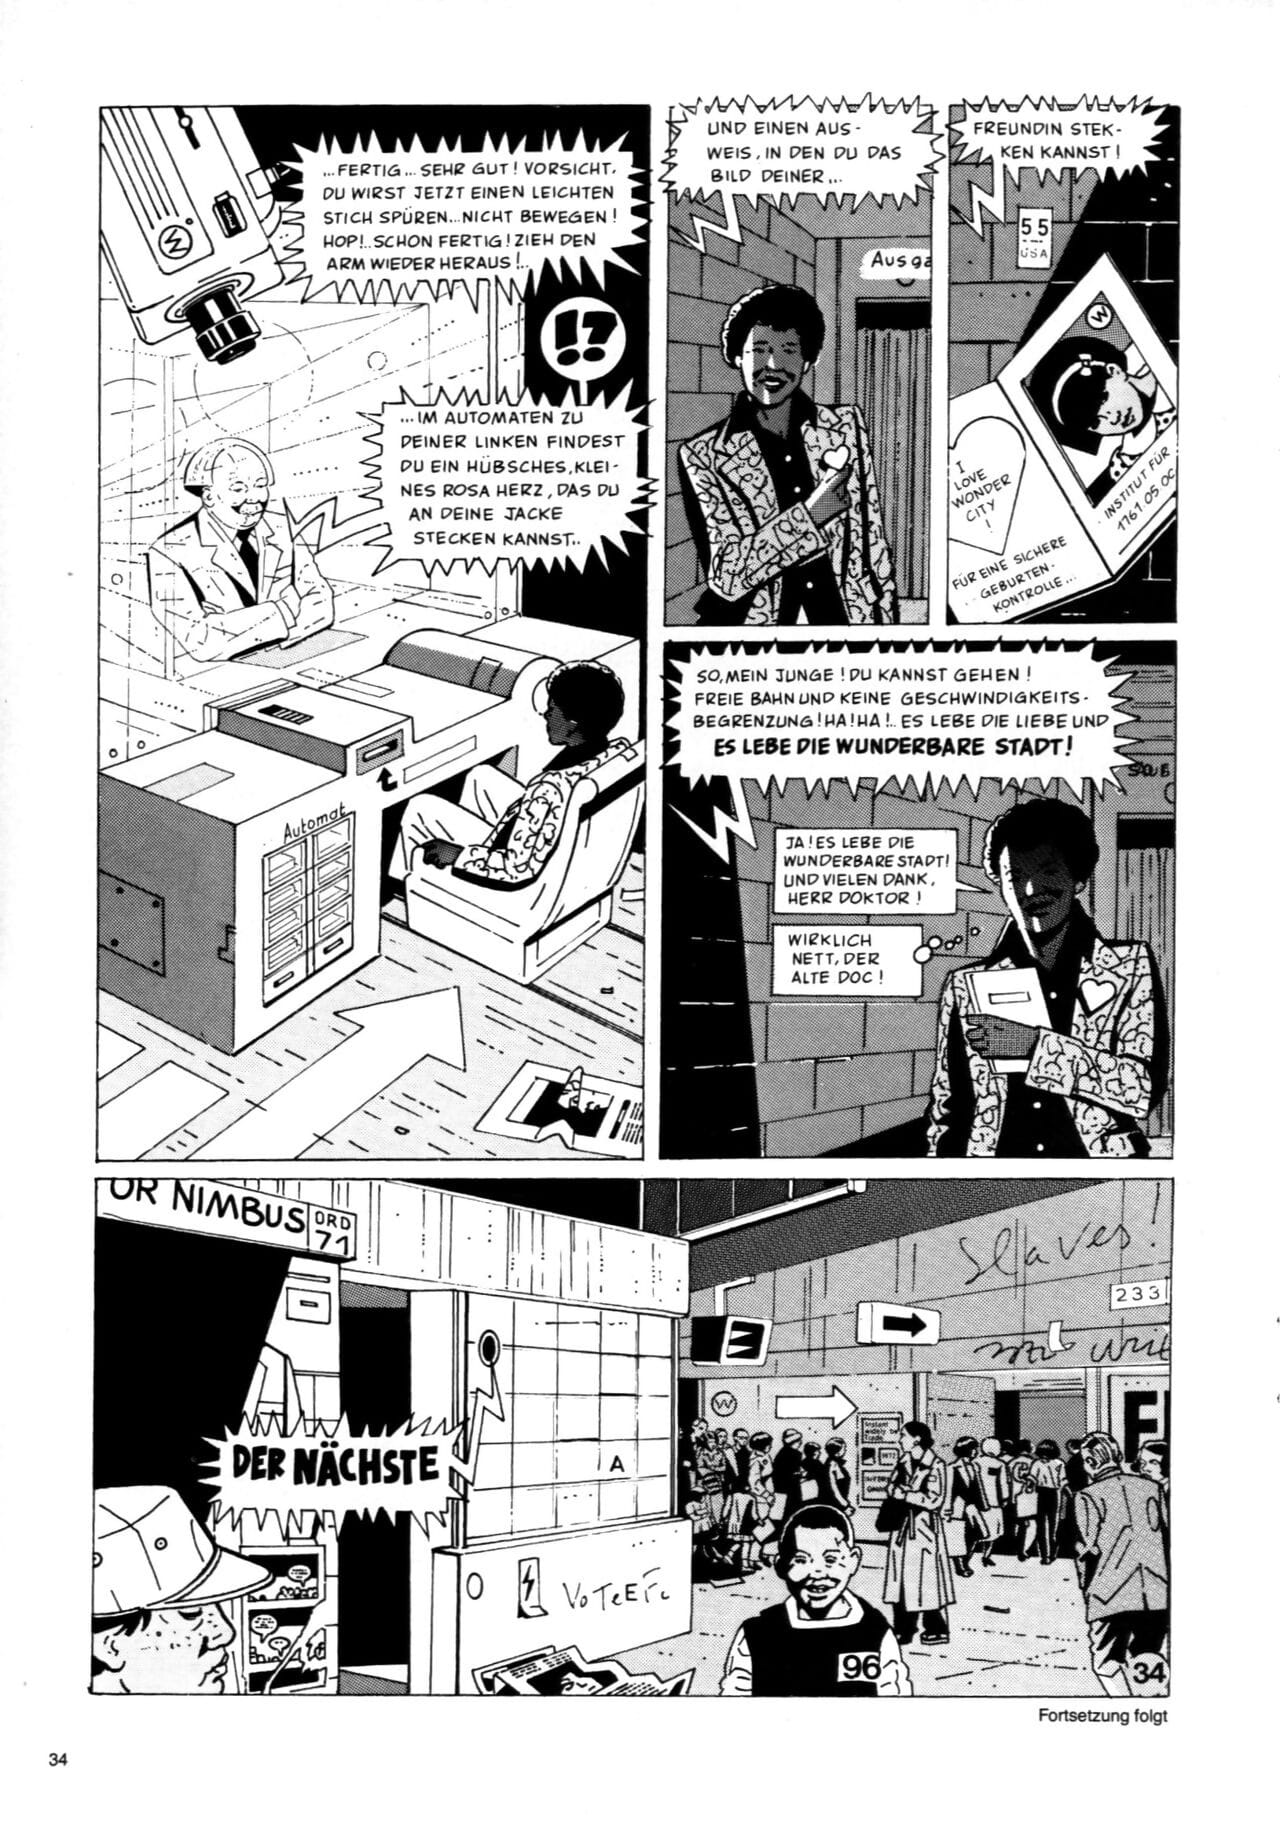 Schwermetall #080 parte 2 page 1